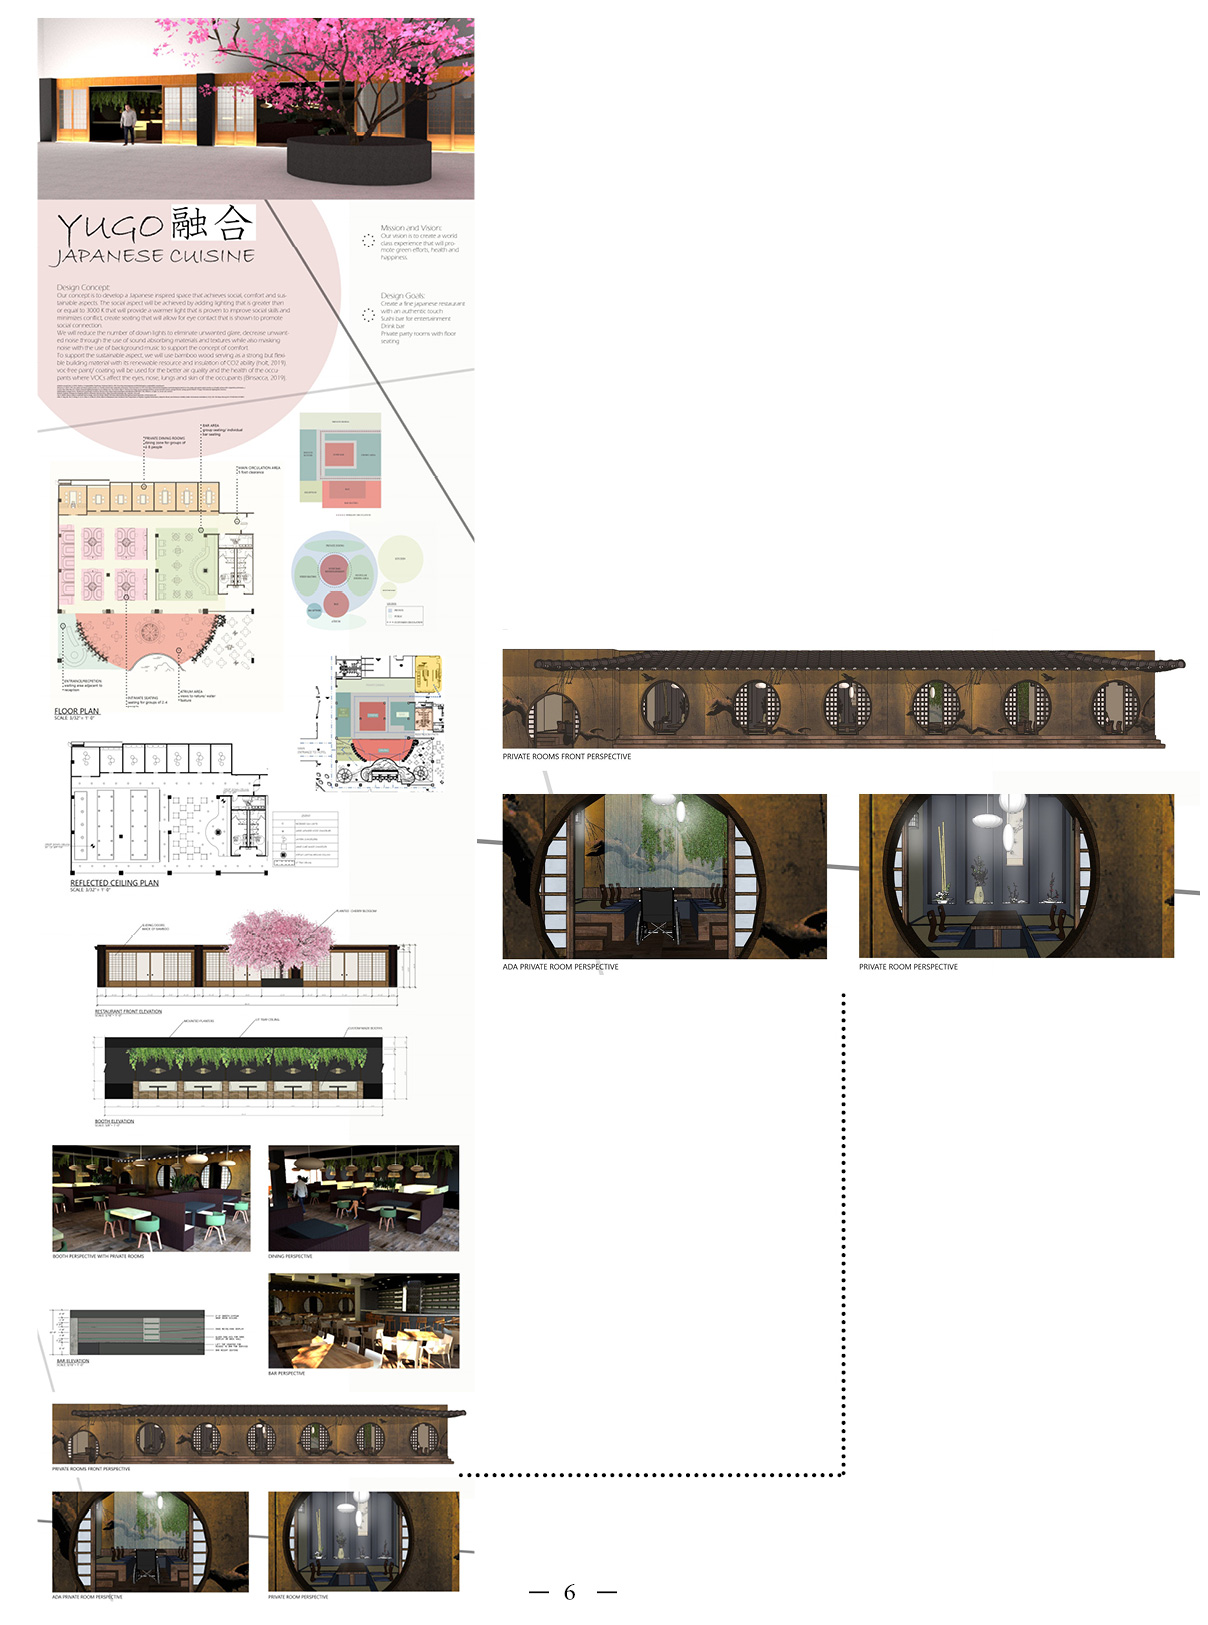 Yugo, Japanese cuisine - Floor plan and interior designs